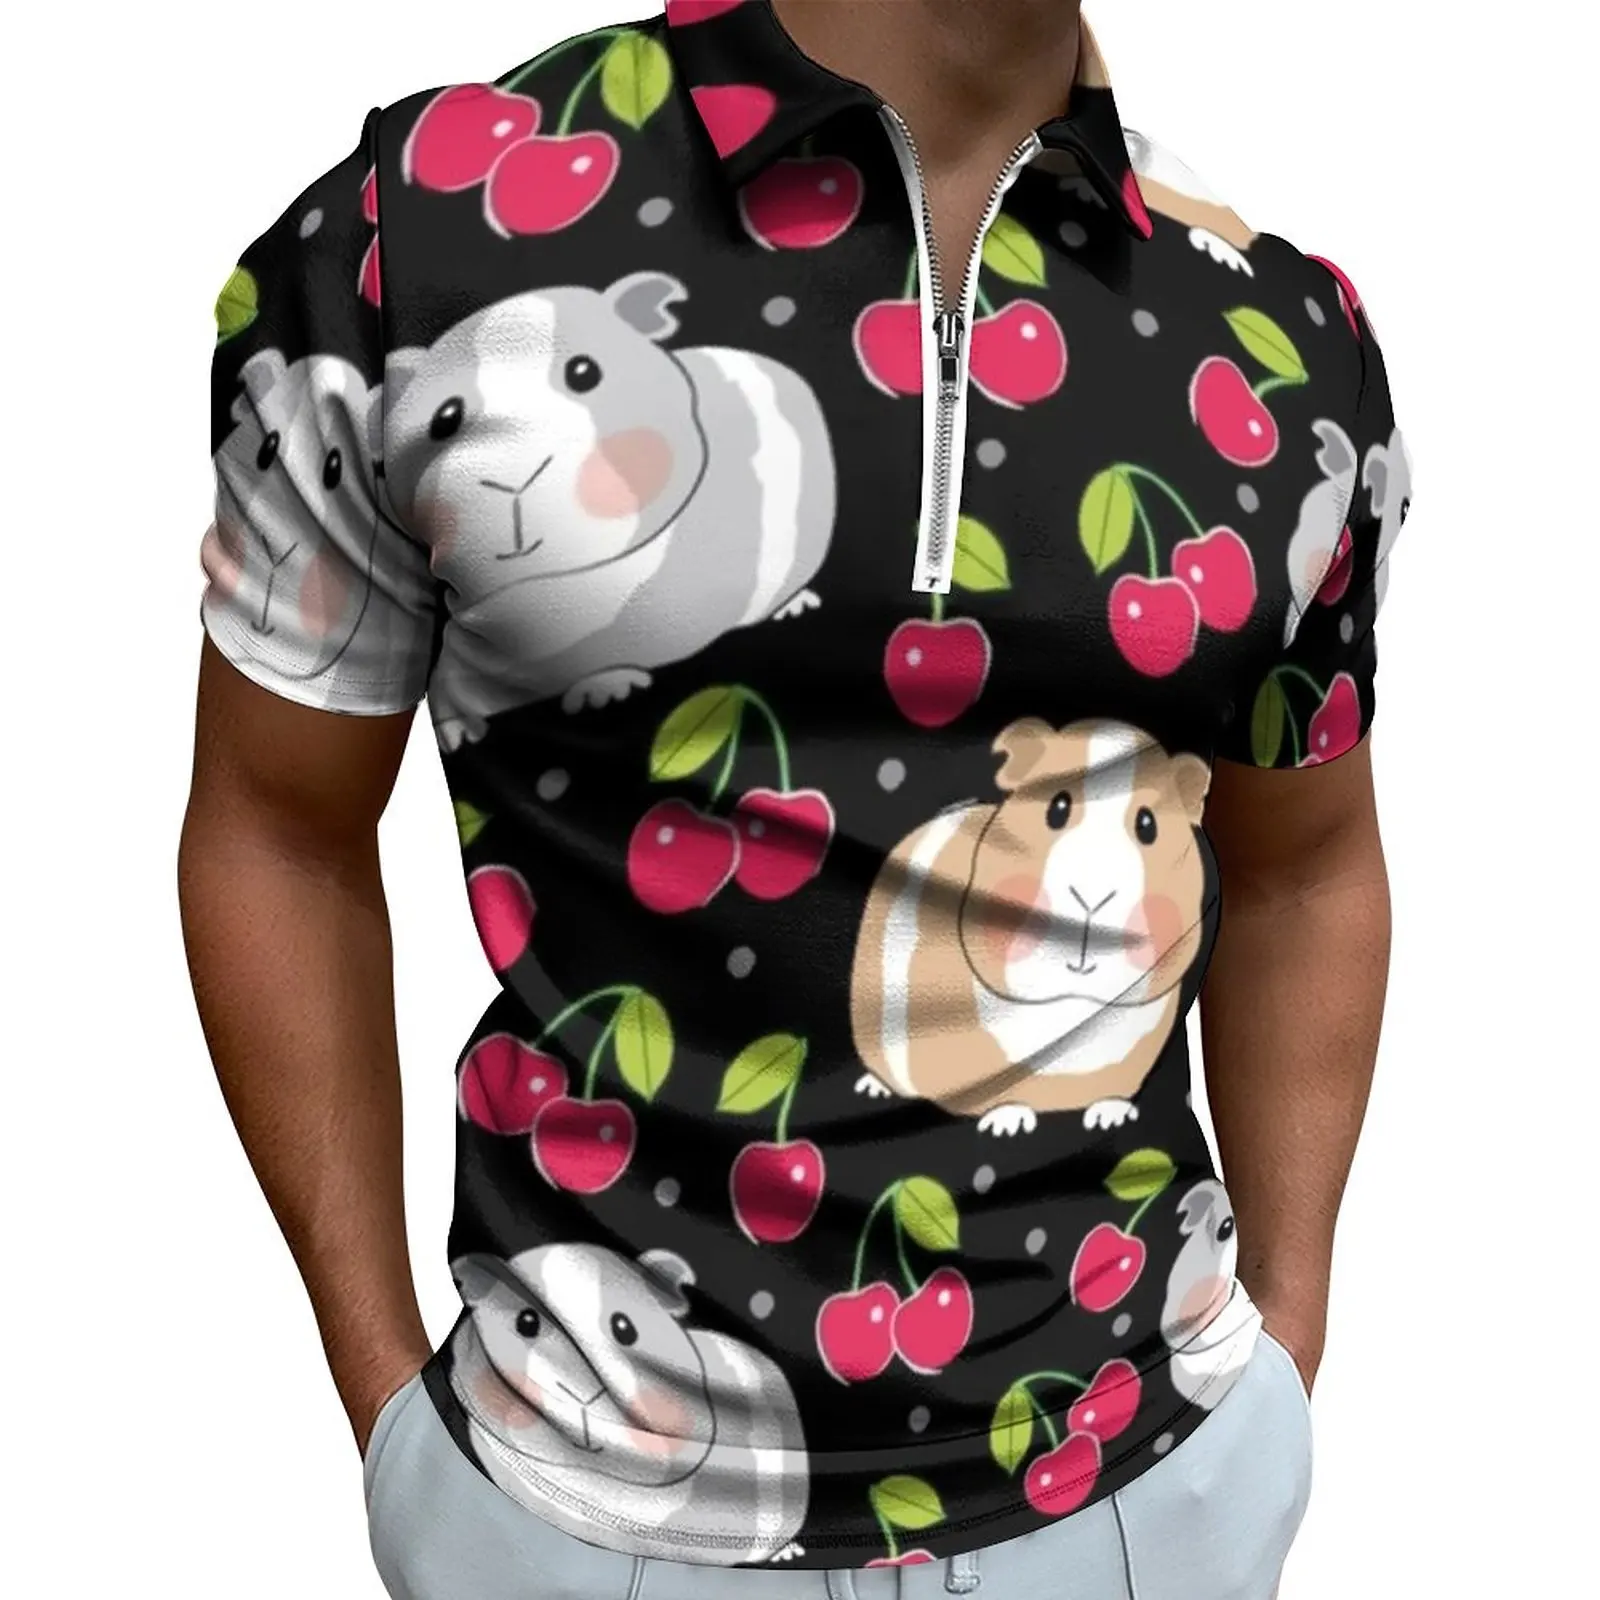 

Cherry Guinea Pig Casual T-Shirts Cute Animal Print Polo Shirts Fashion Shirt Beach Short Sleeve Graphic Top Large Size